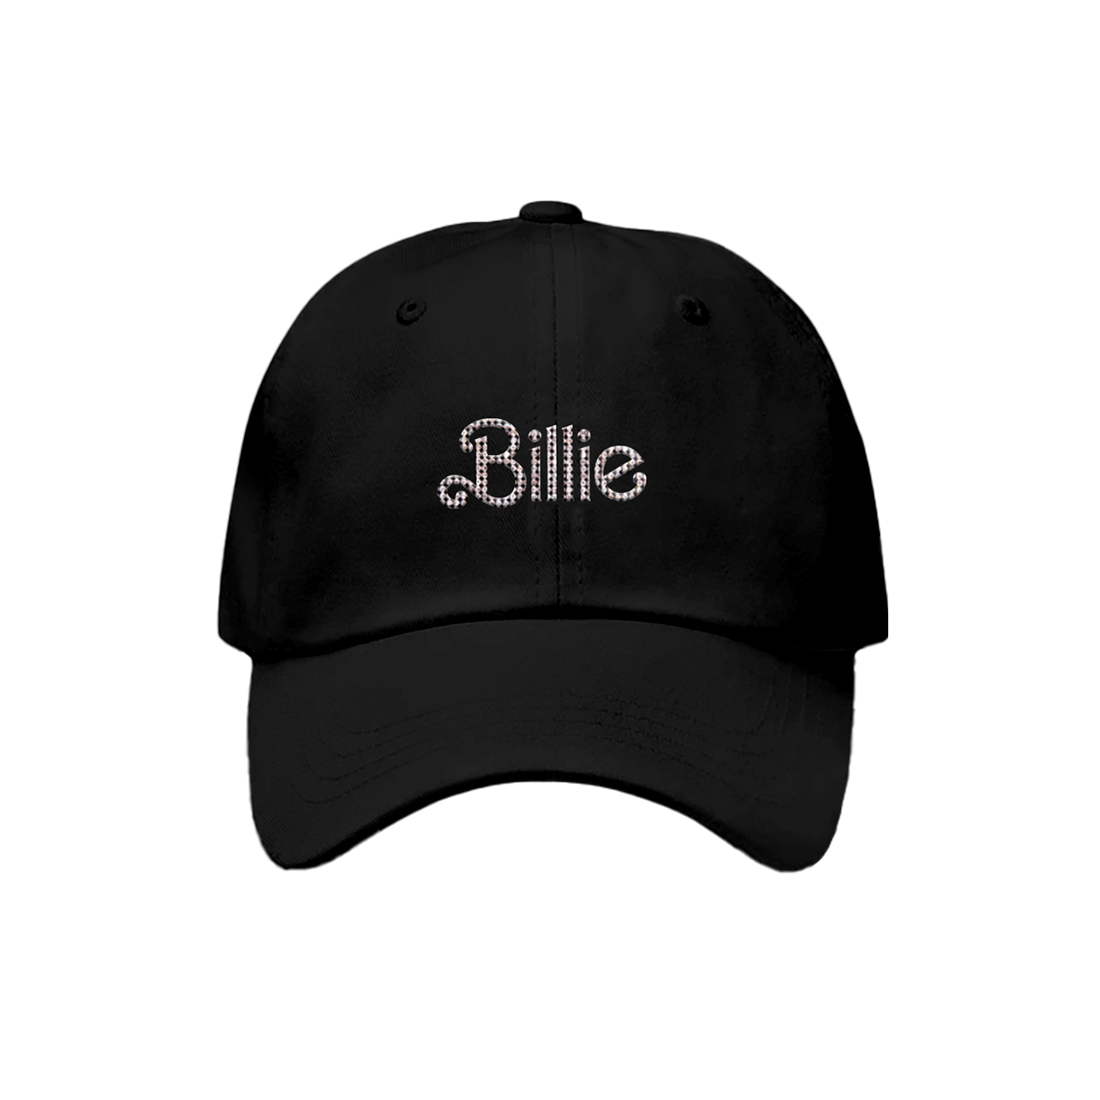 Billie Eilish - Barbie x Billie Eilish Black Hat